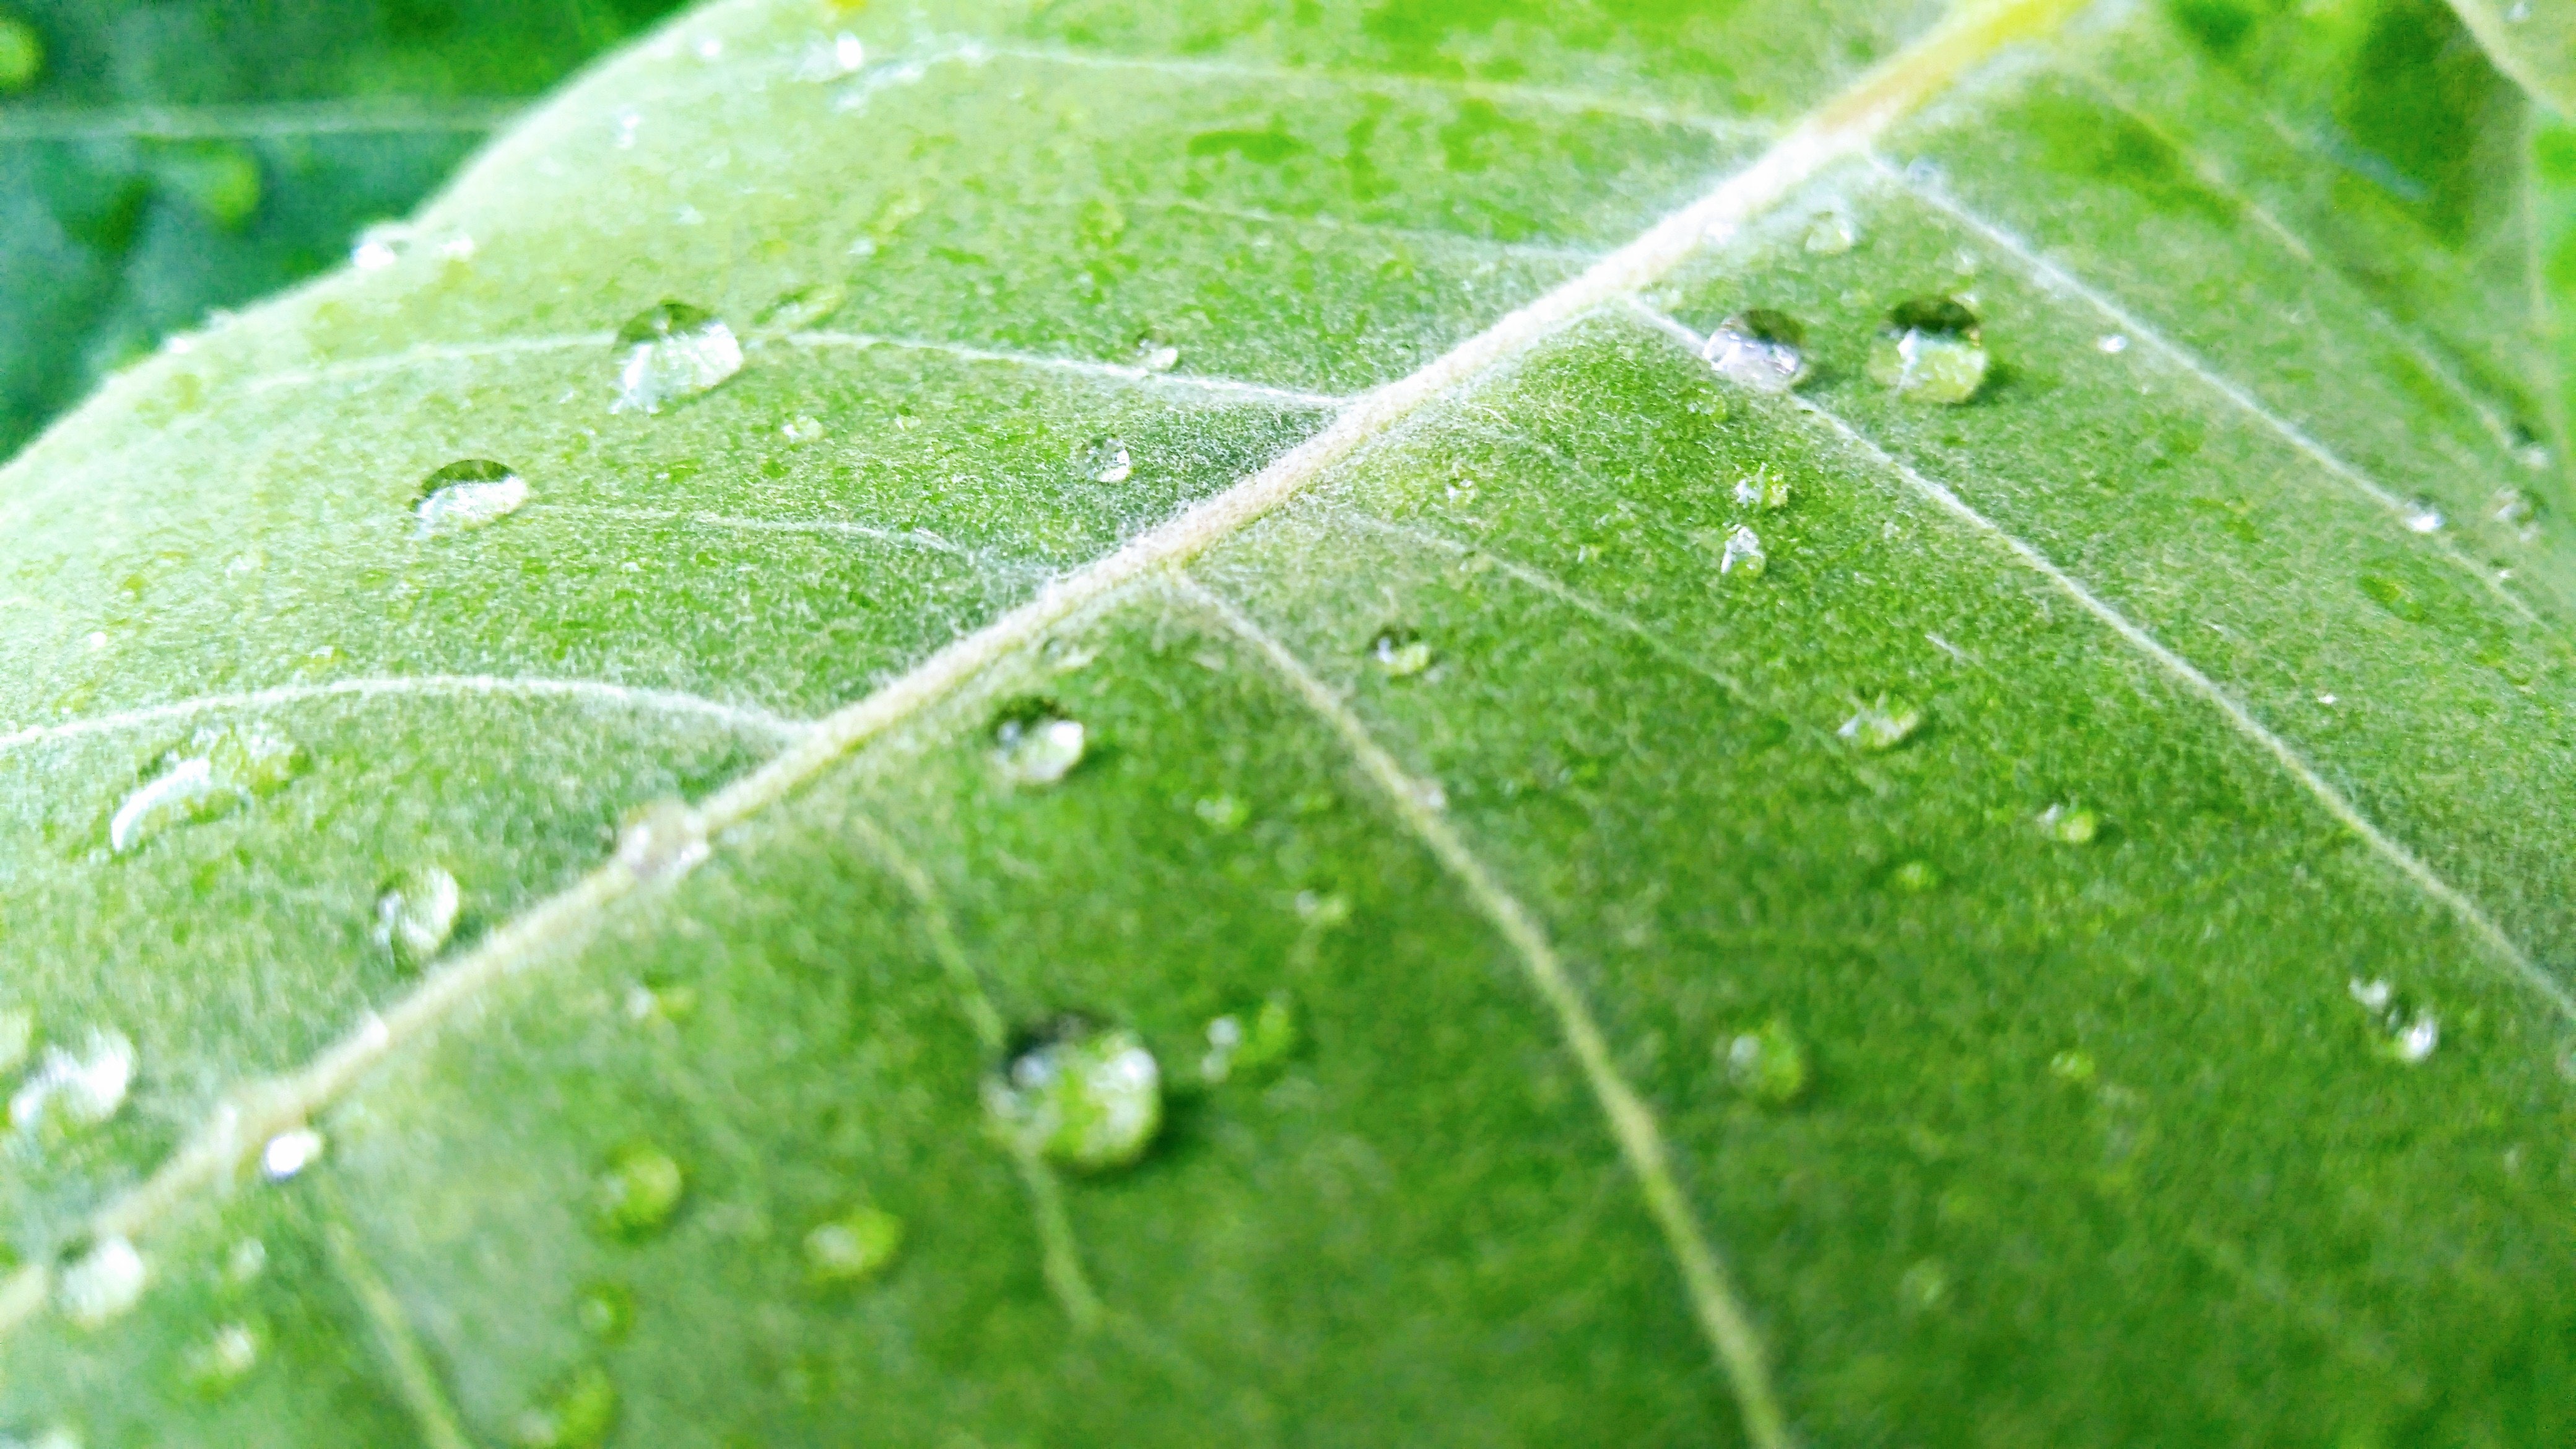 lenovo k6 power wallpaper,leaf,water,drop,green,dew